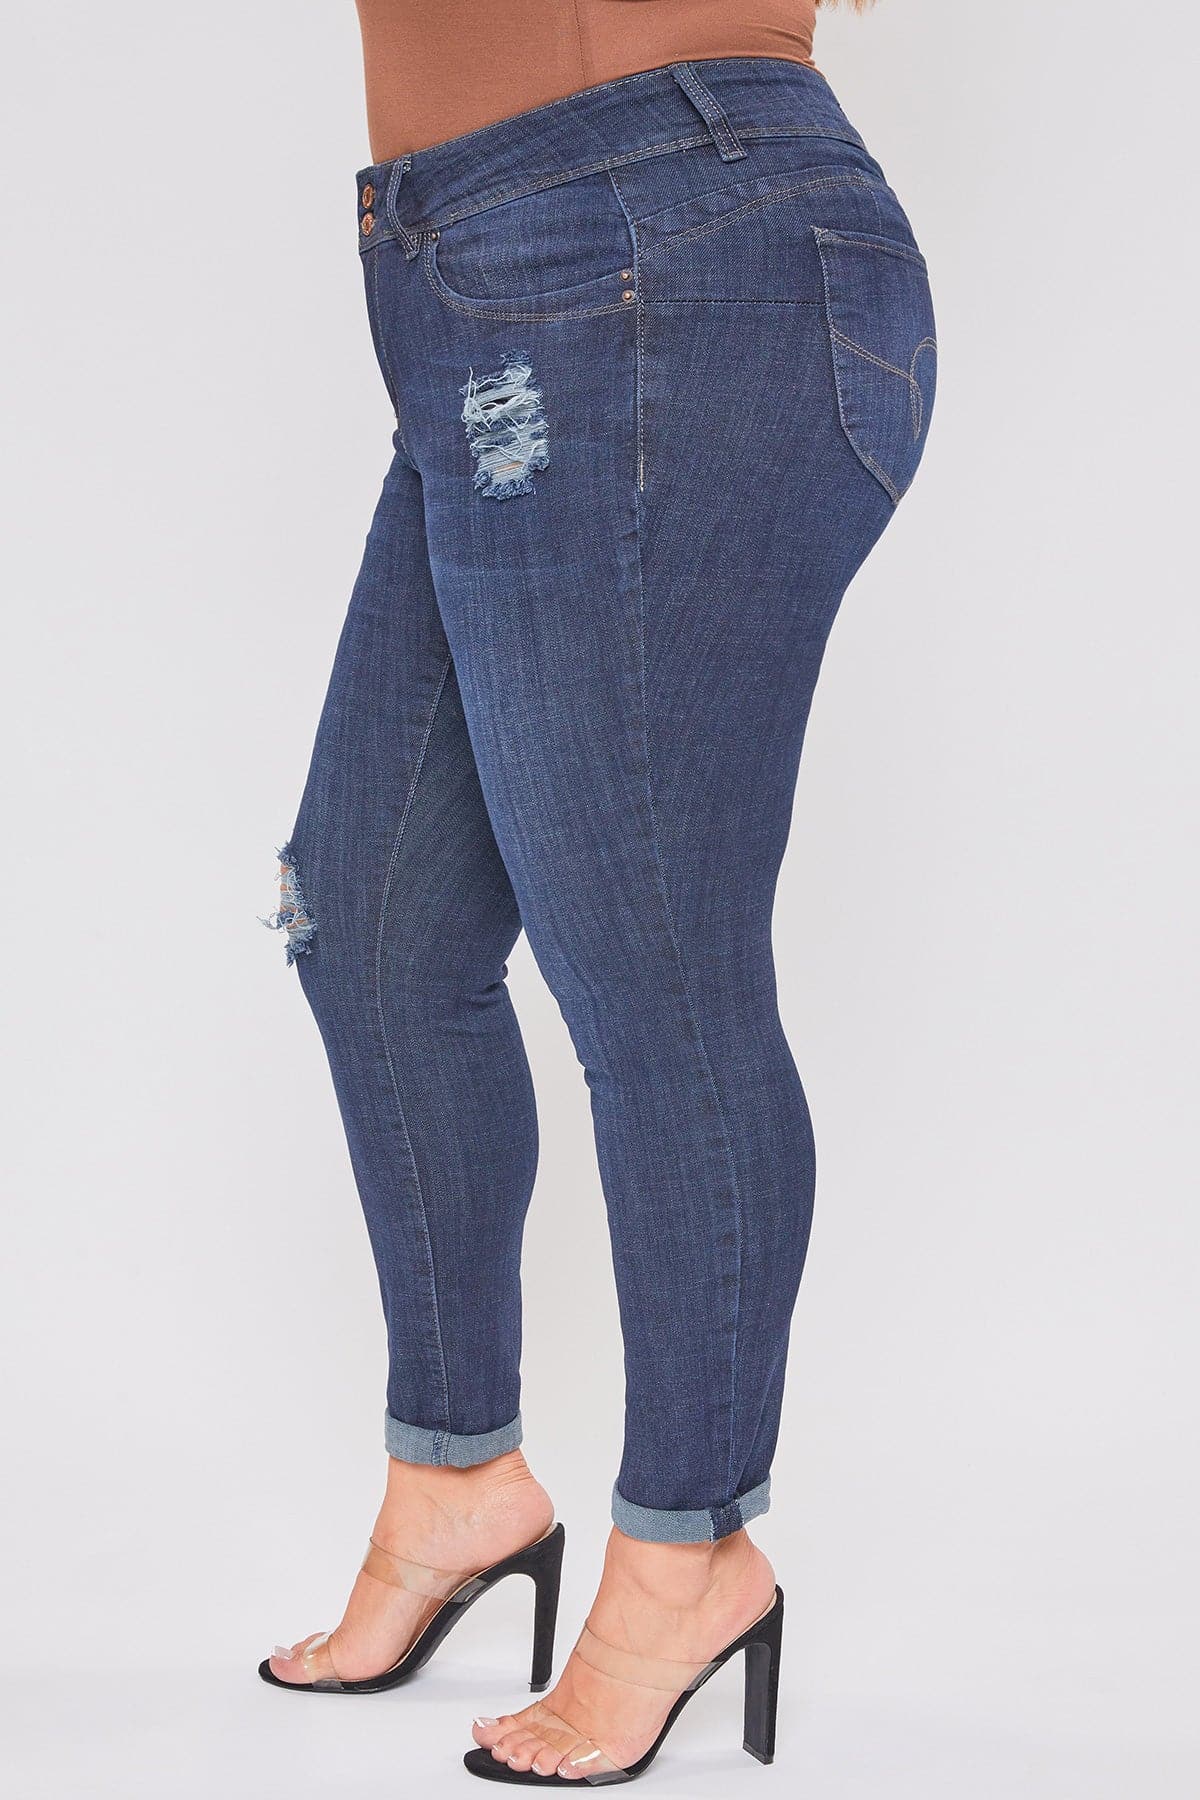 Plus Size Women's WannaBettaButt Premium Roll Up Cuff Ankle Jeans